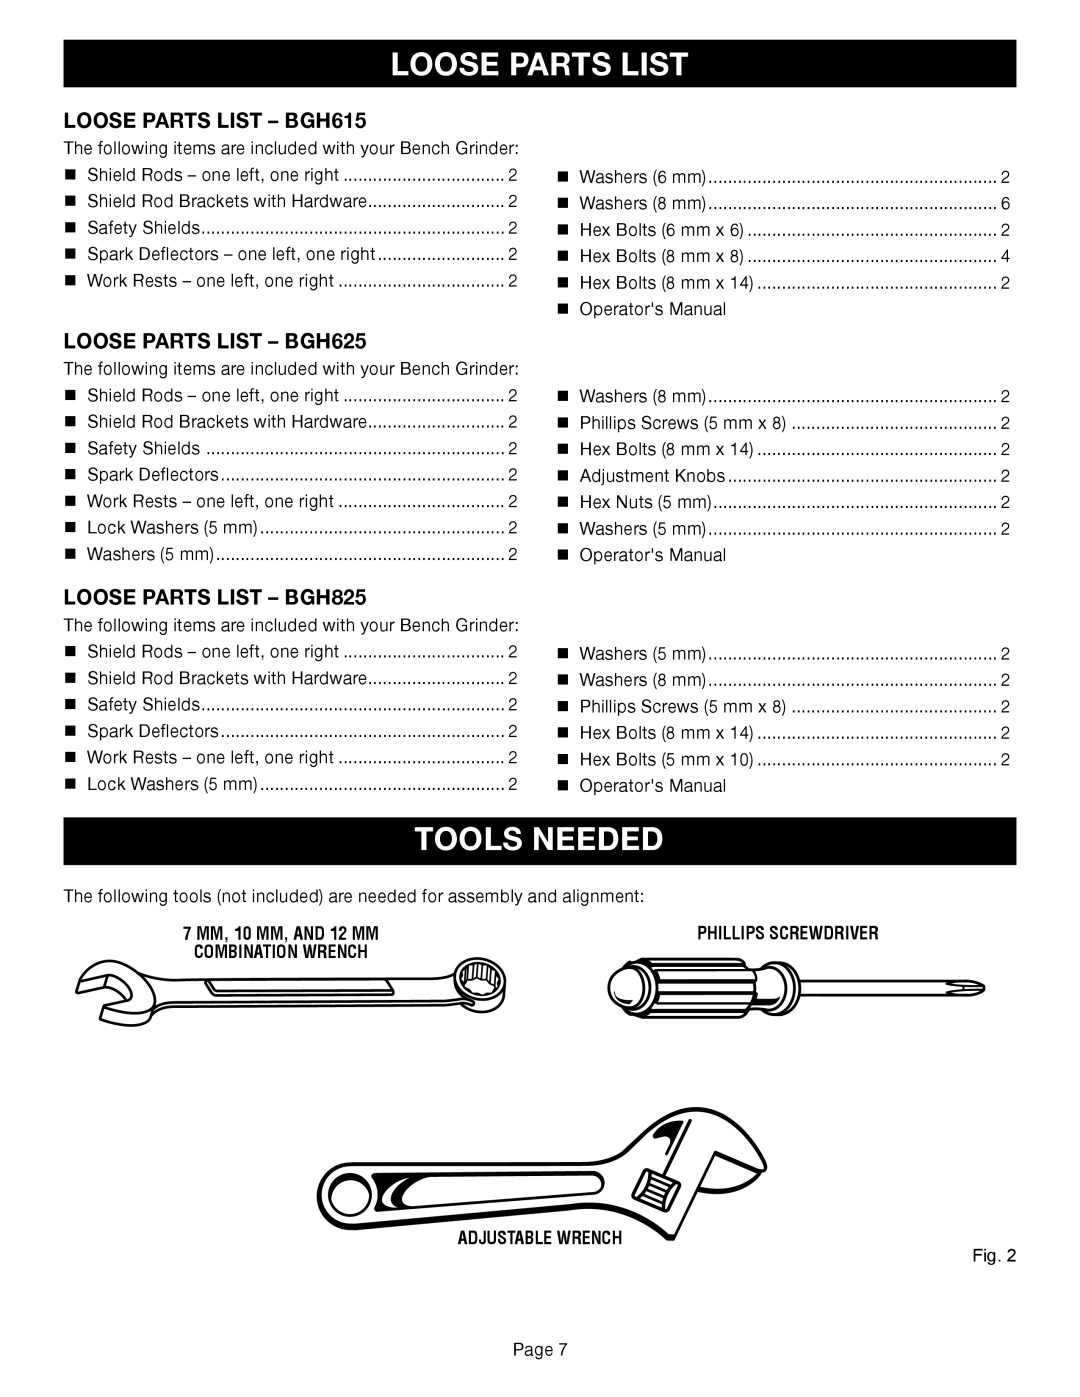 Ryobi warranty Tools Needed, Loose Parts List BGH615, Loose Parts List BGH625, Loose Parts List BGH825 